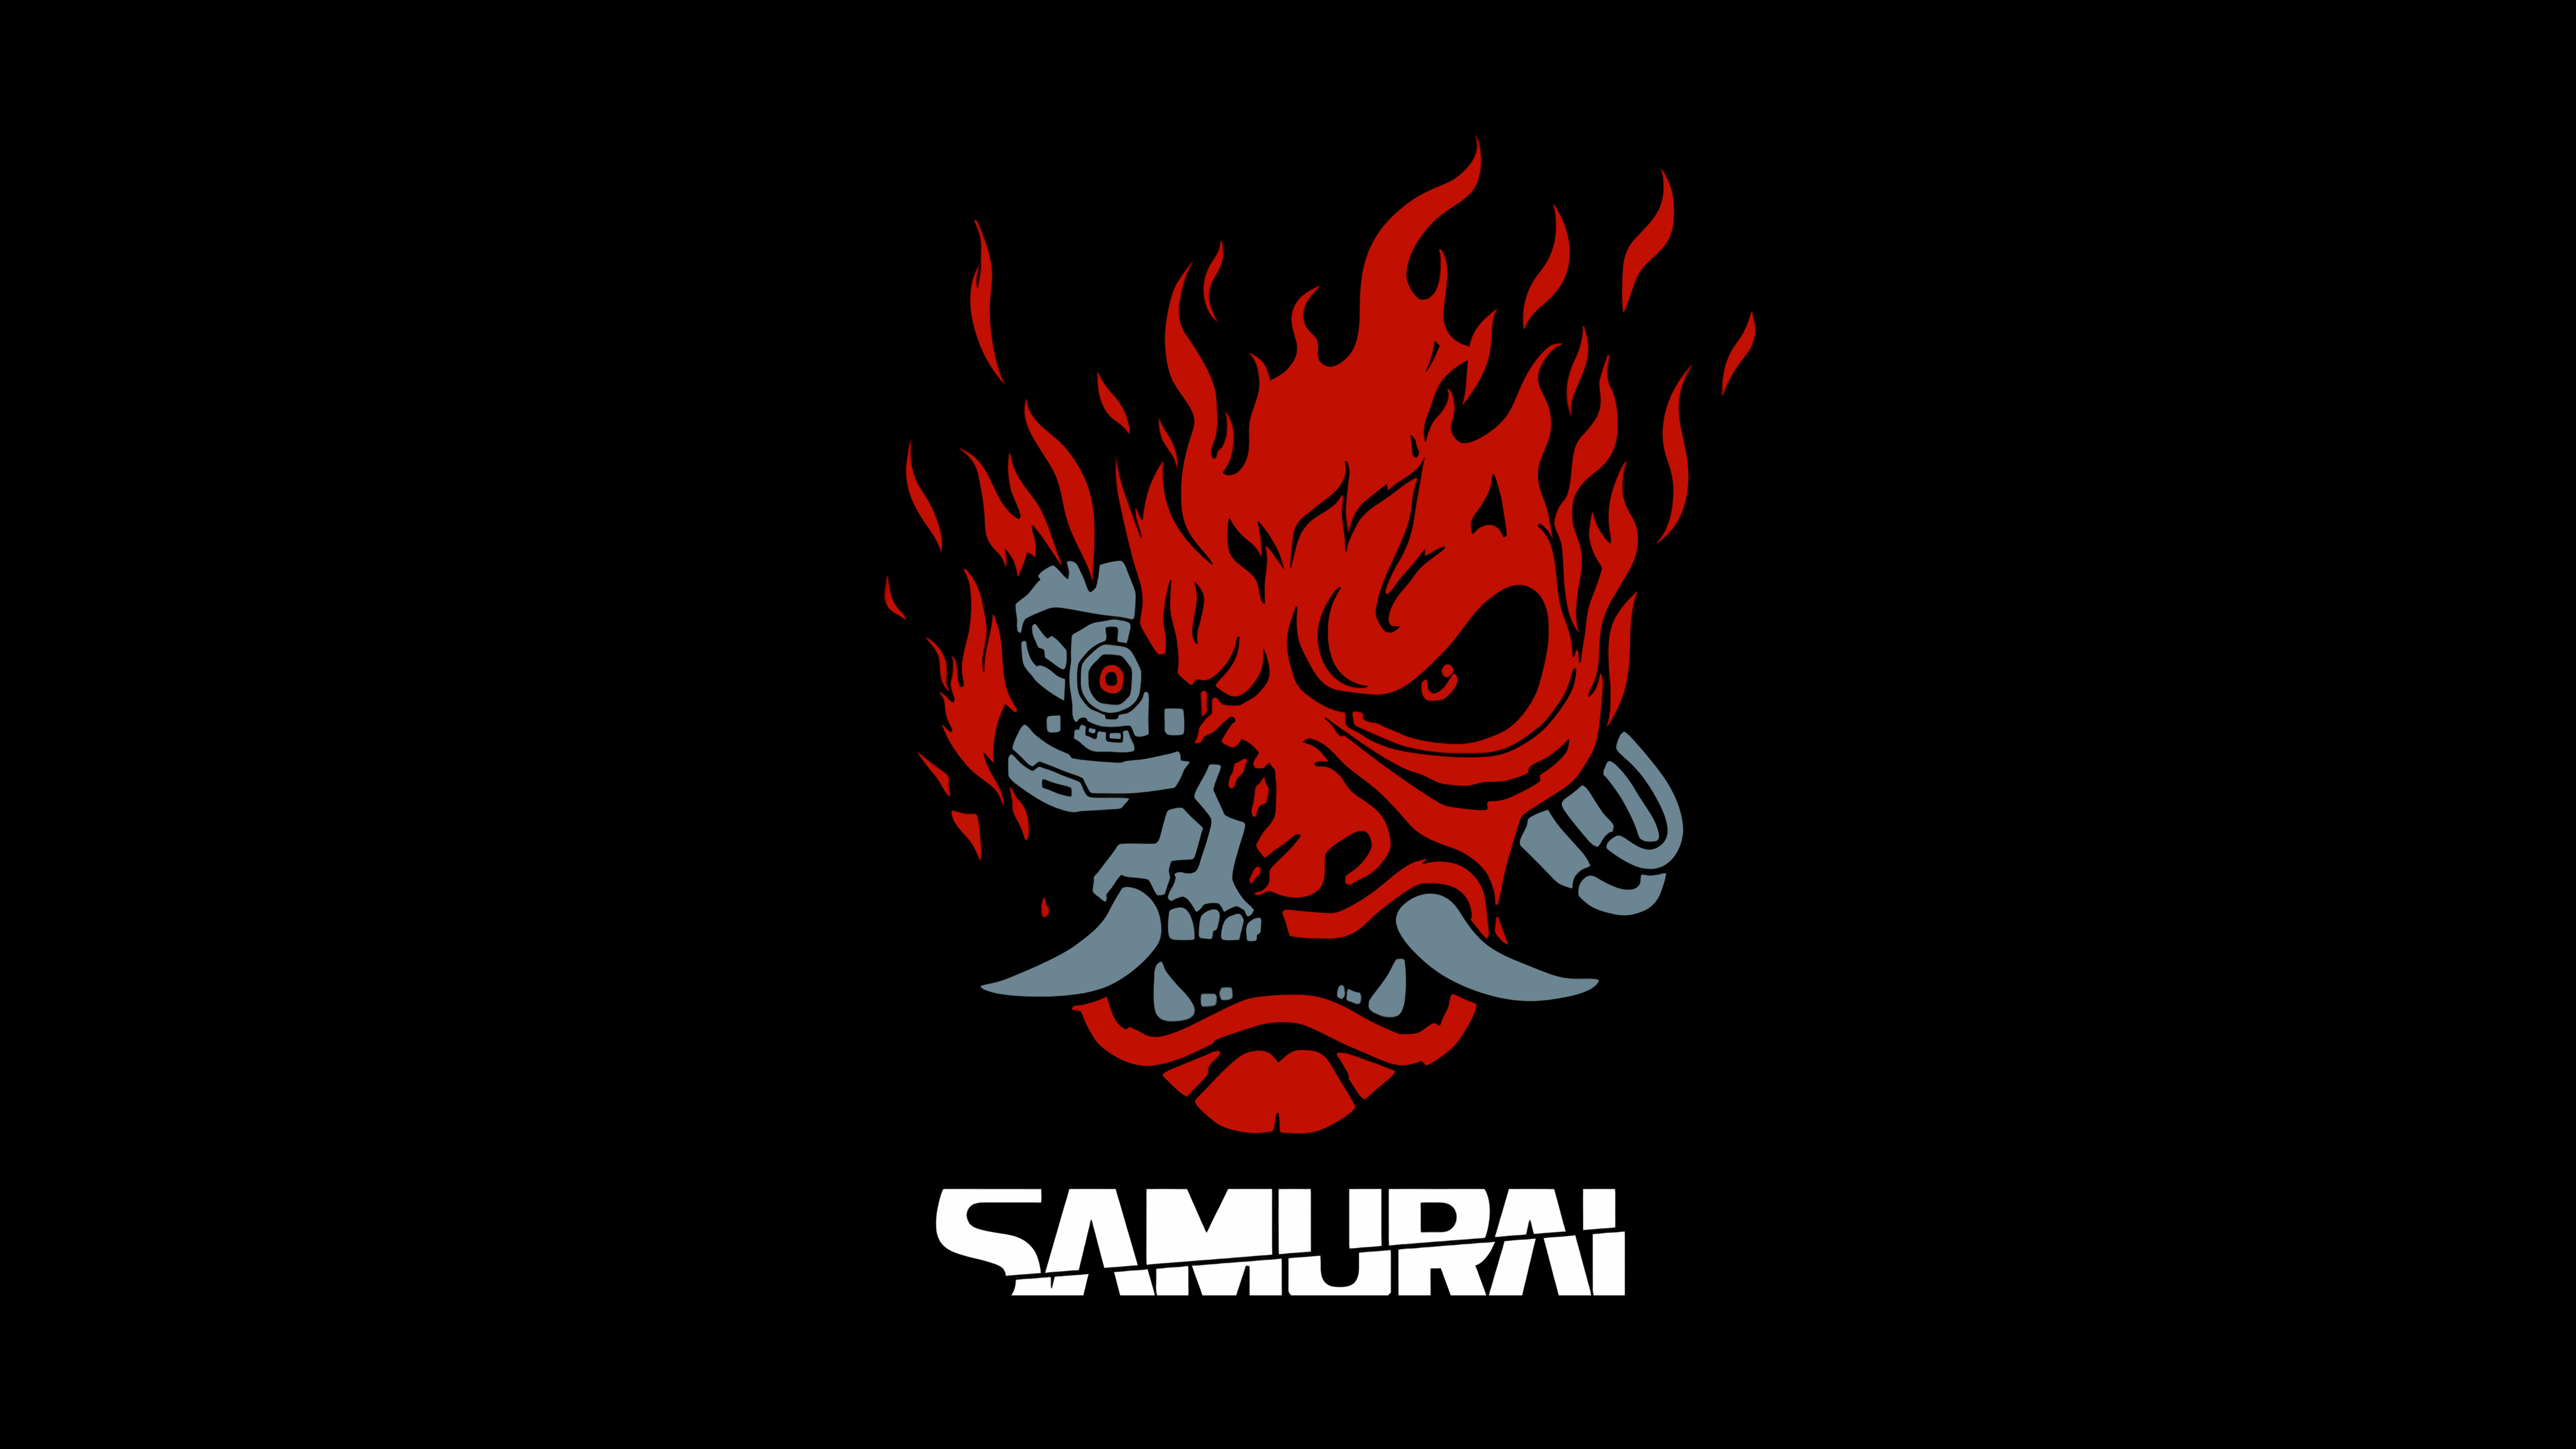 Samurai группа. Группа Самурай киберпанк. Группа Самурай киберпанк 2077. Логотип Самурай Cyberpunk 2077. Знак самурая из Cyberpunk 2077.